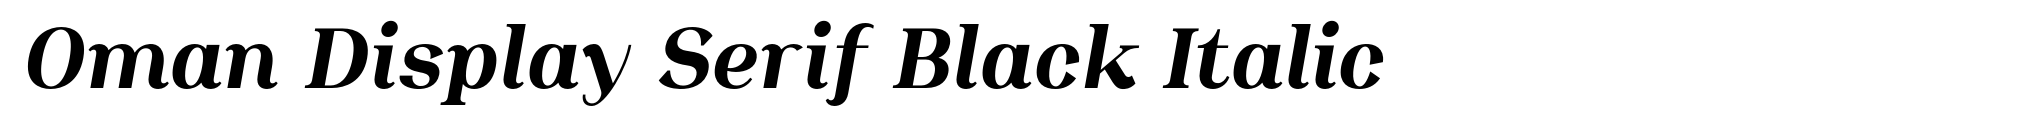 Oman Display Serif Black Italic image